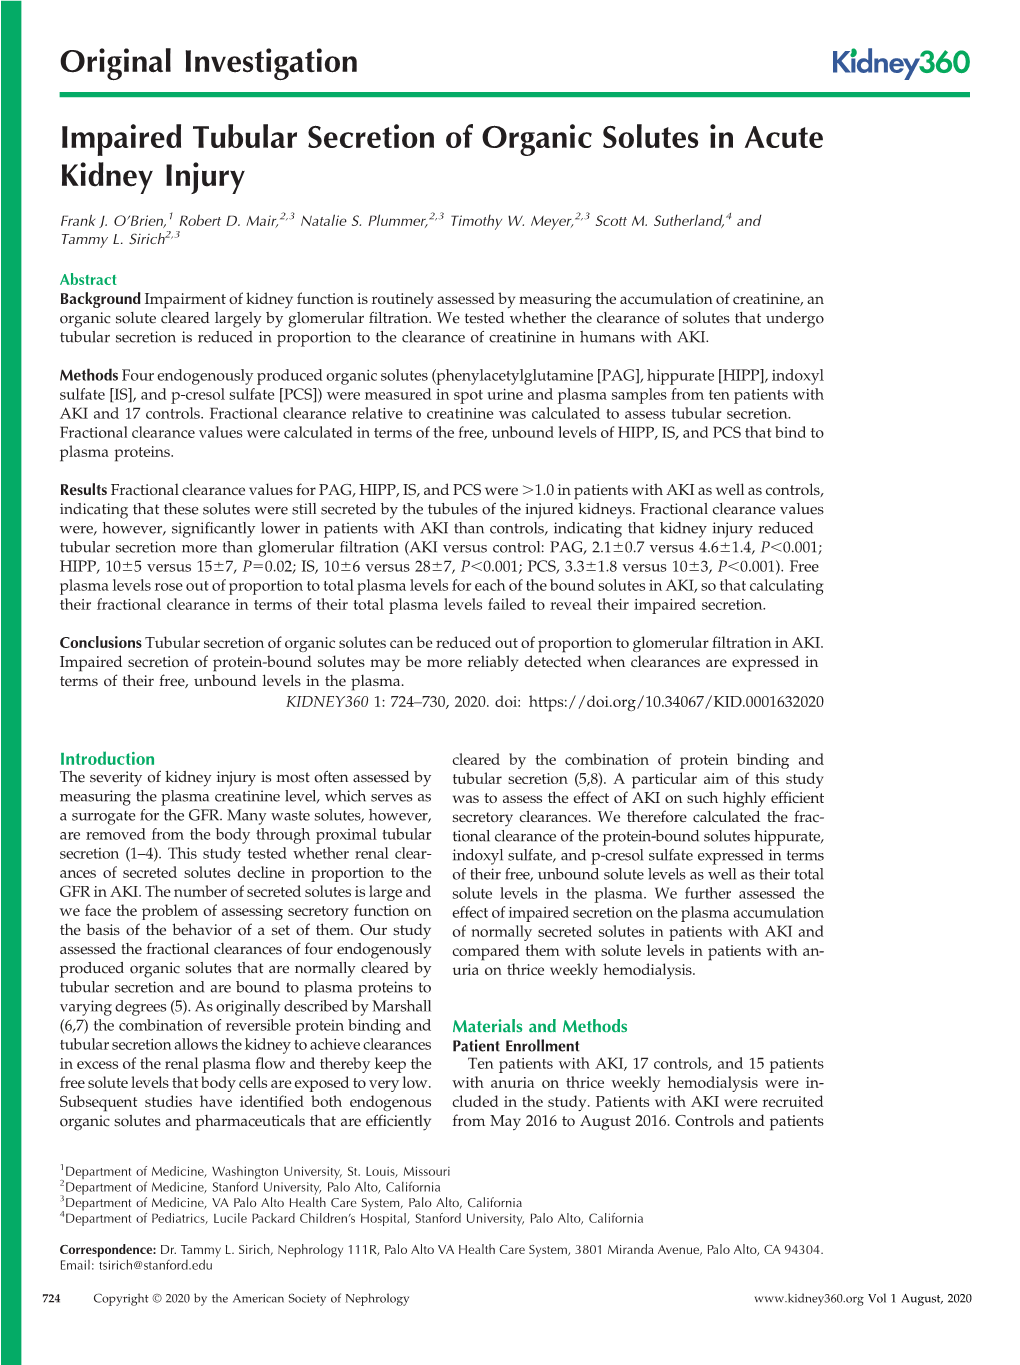 Impaired Tubular Secretion of Organic Solutes in Acute Kidney Injury